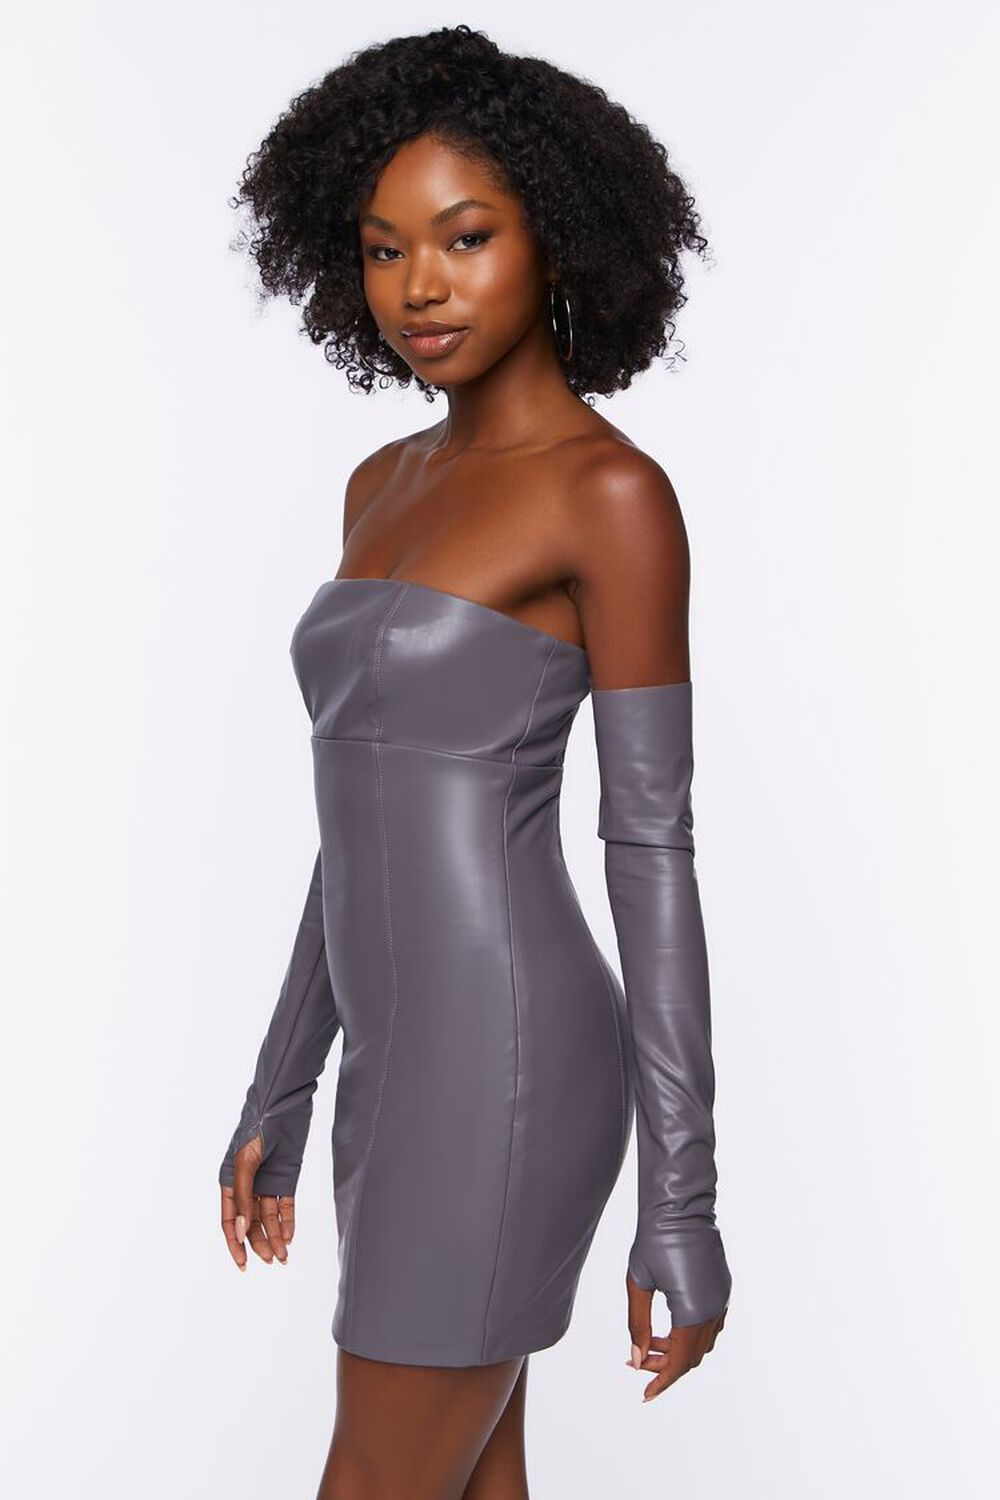 CHARCOAL Faux Leather Tube Dress & Glove Set, image 2